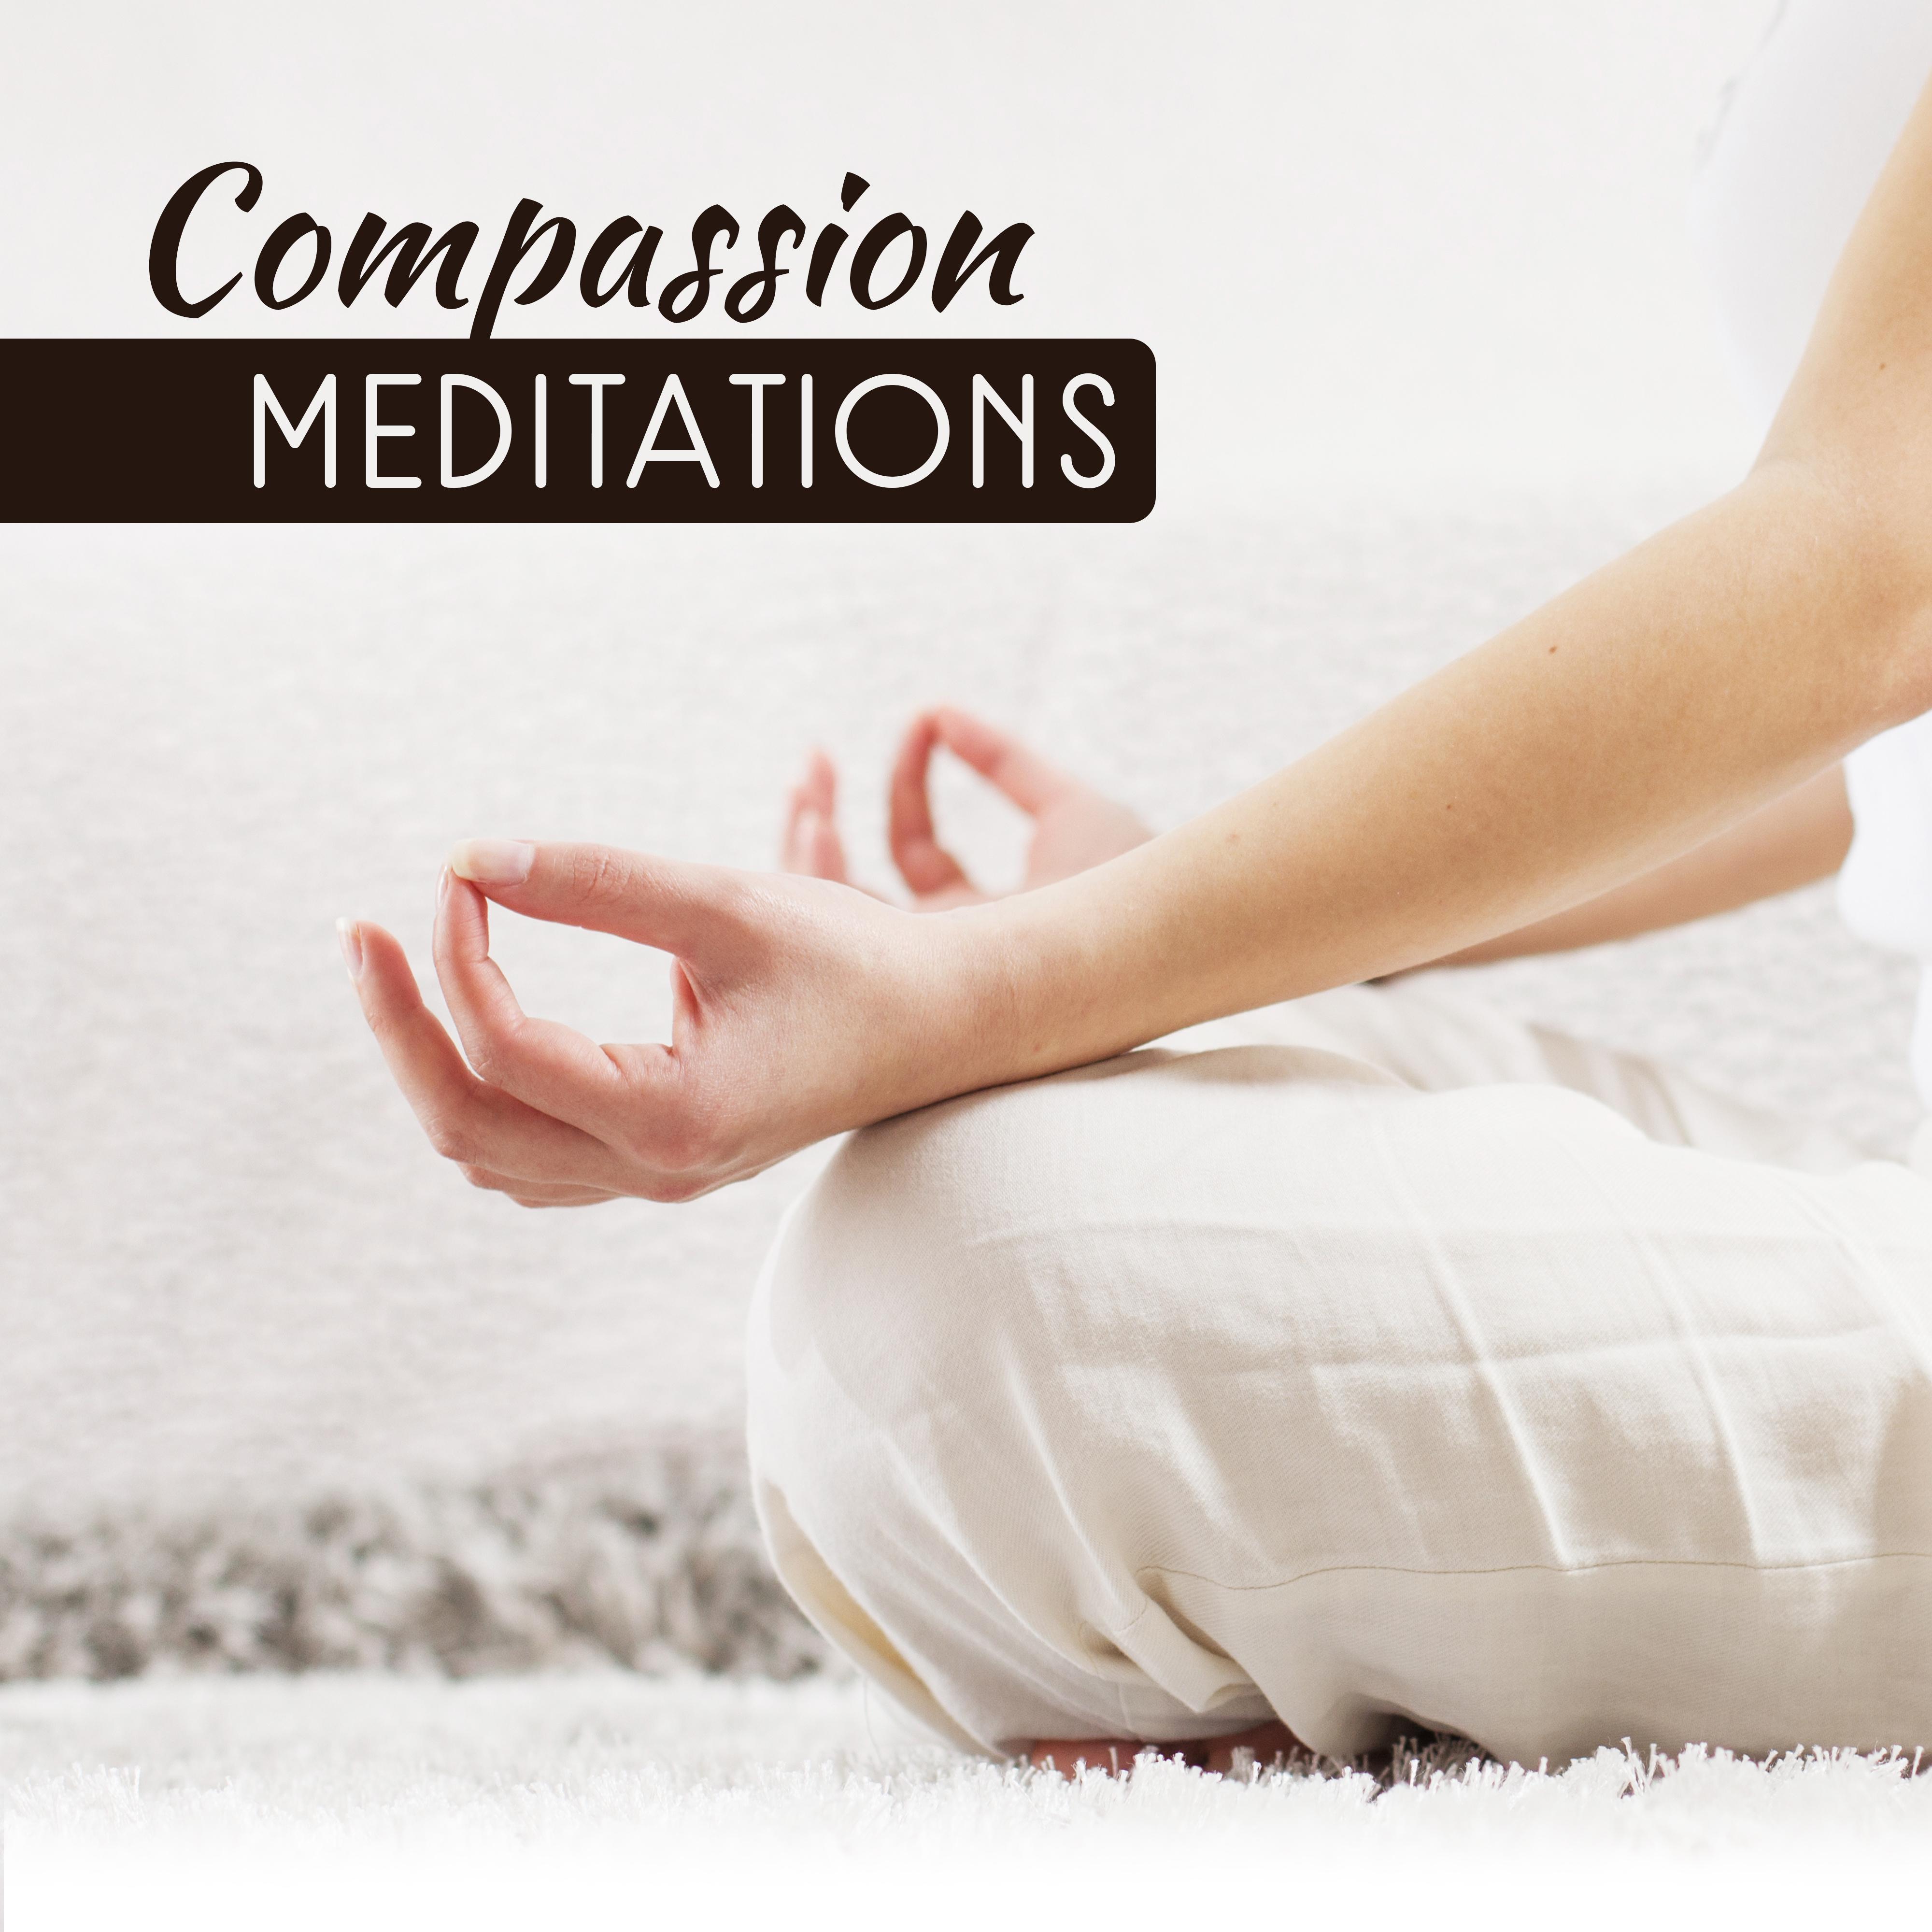 Compassion Meditations